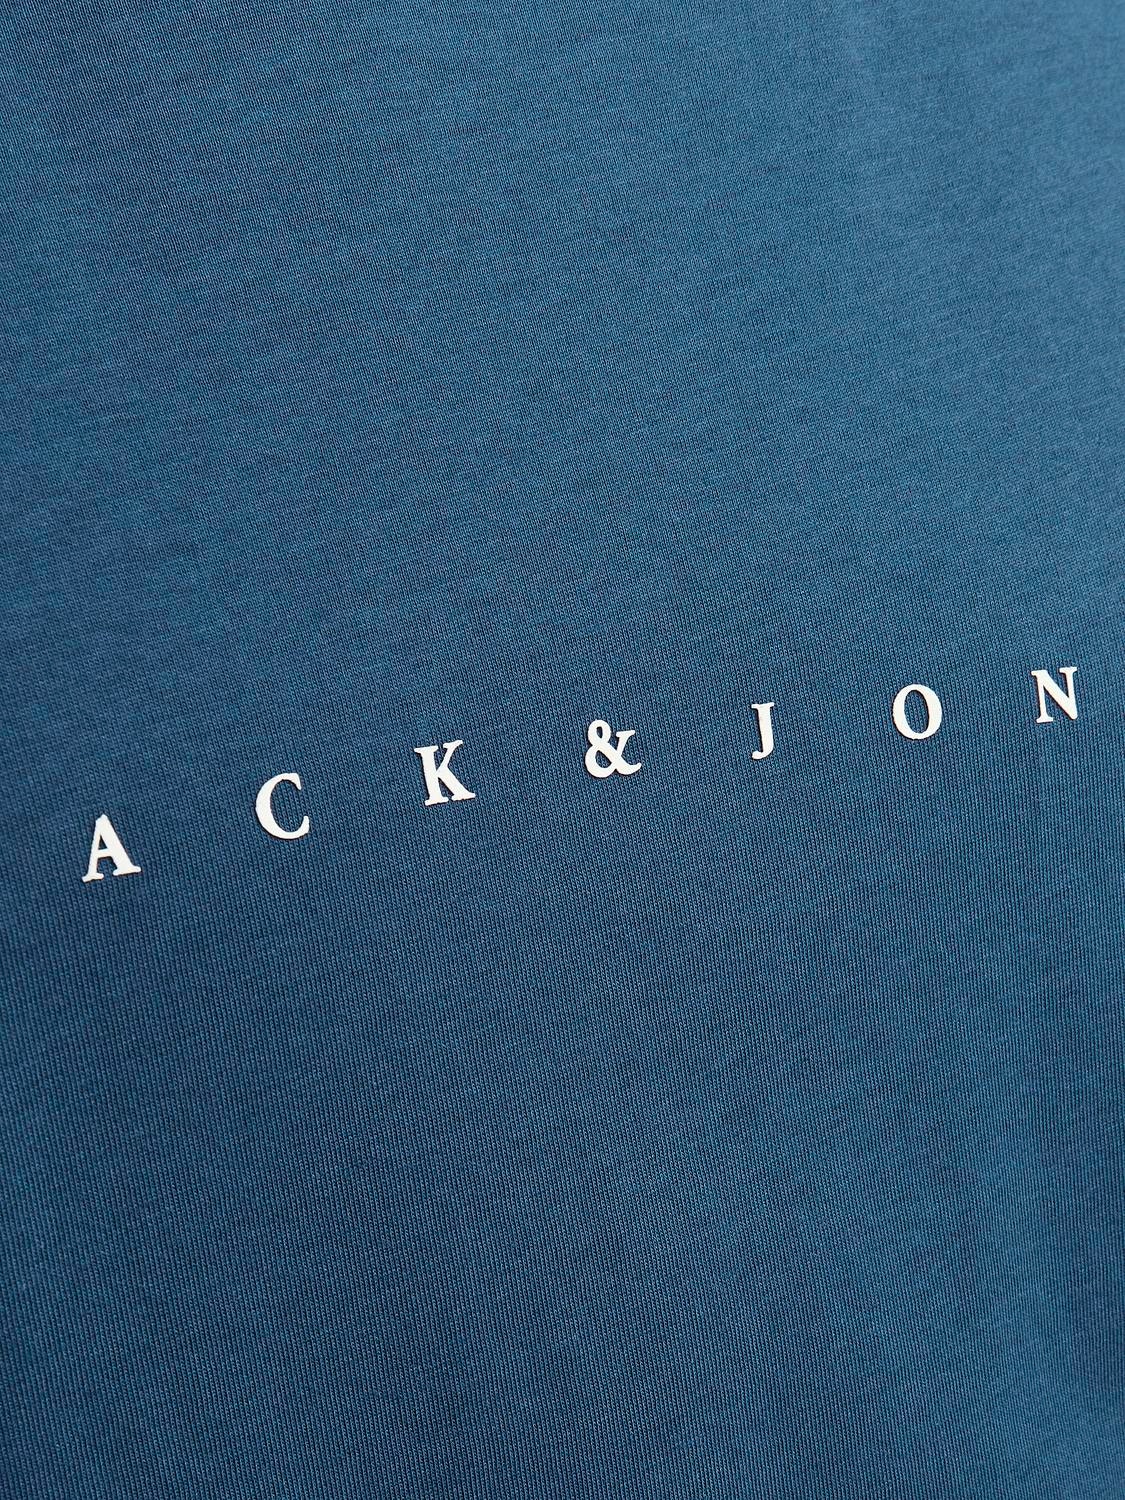 Jack & Jones Logo Crew neck T-shirt -Ensign Blue - 12234746